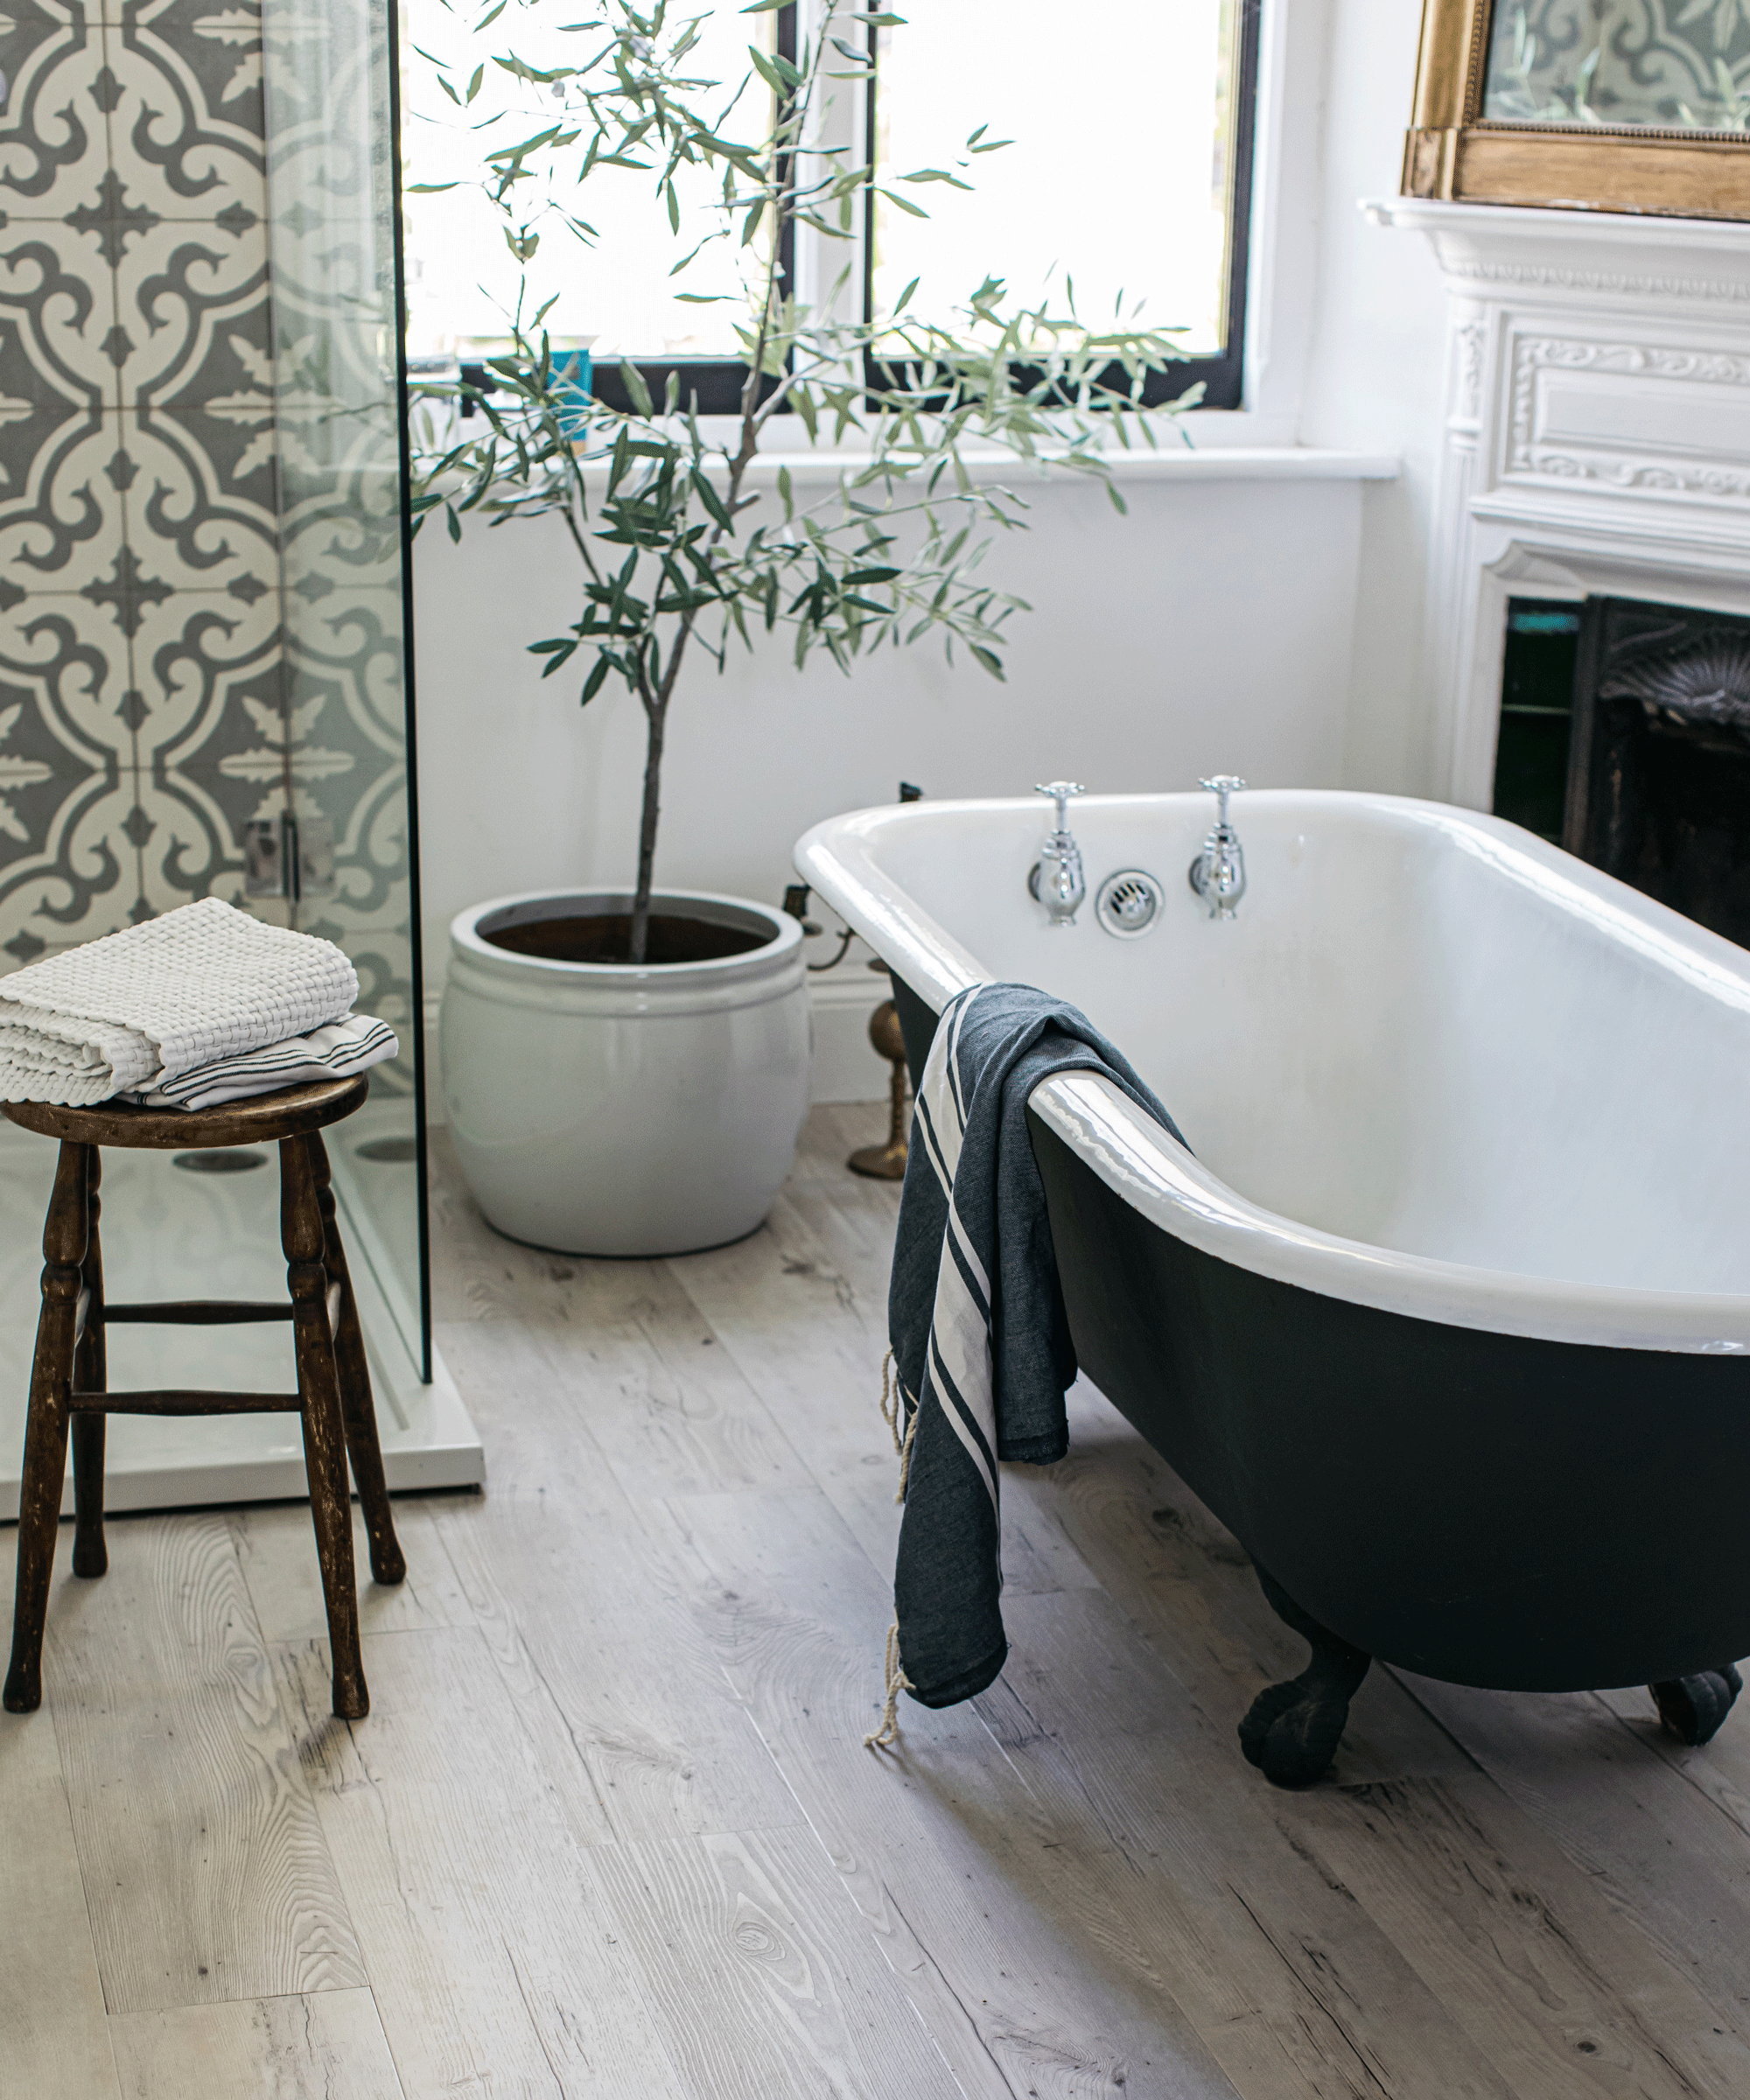 Freestanding bath with wooden-like vinyl flooring